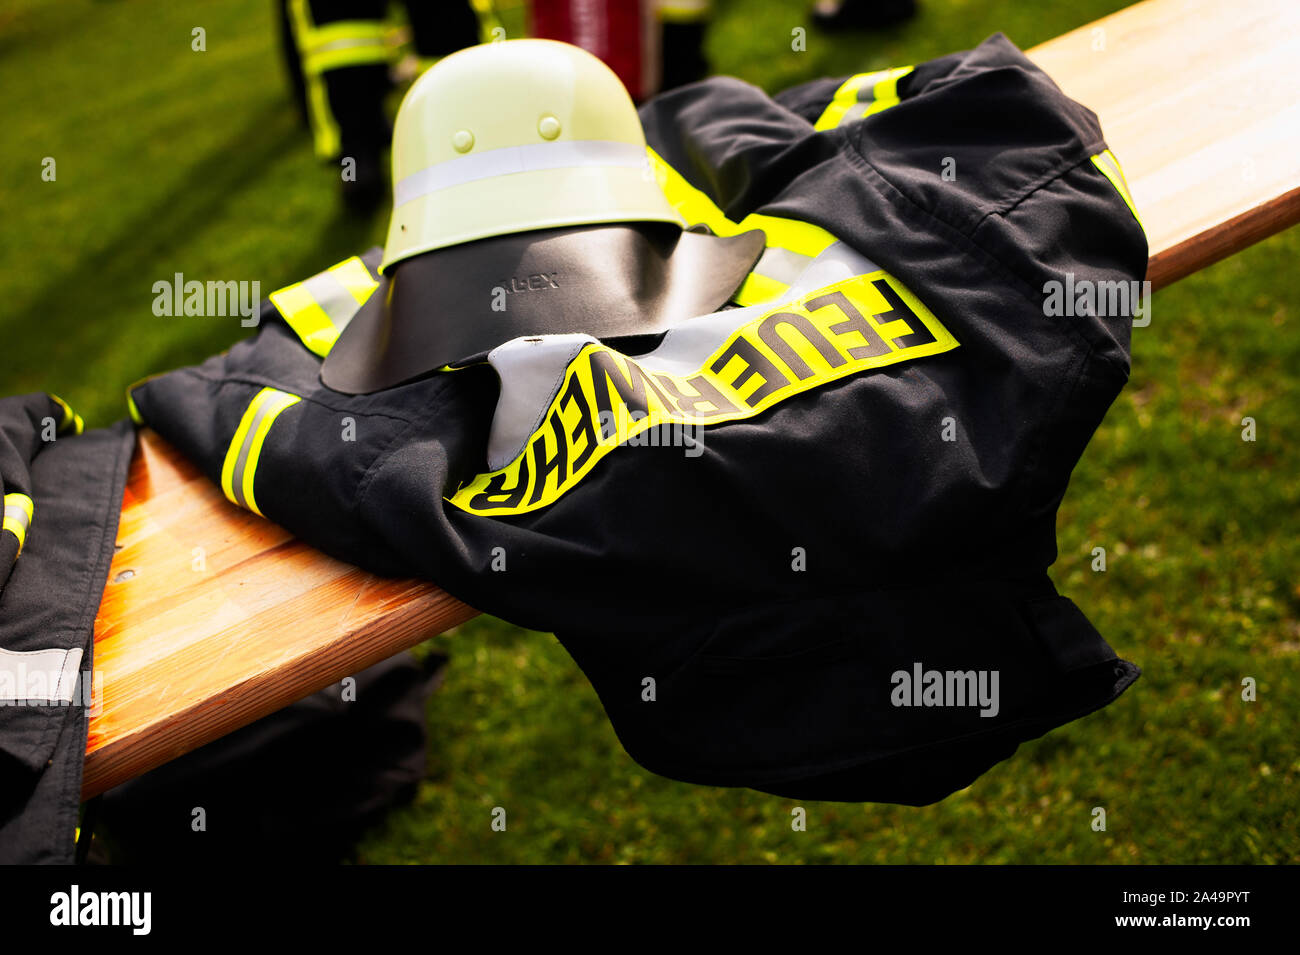 Germany, Niederstetten. September 2019. Firefighters uniform with text Feuerwehr, in inglish fireman. Stock Photo